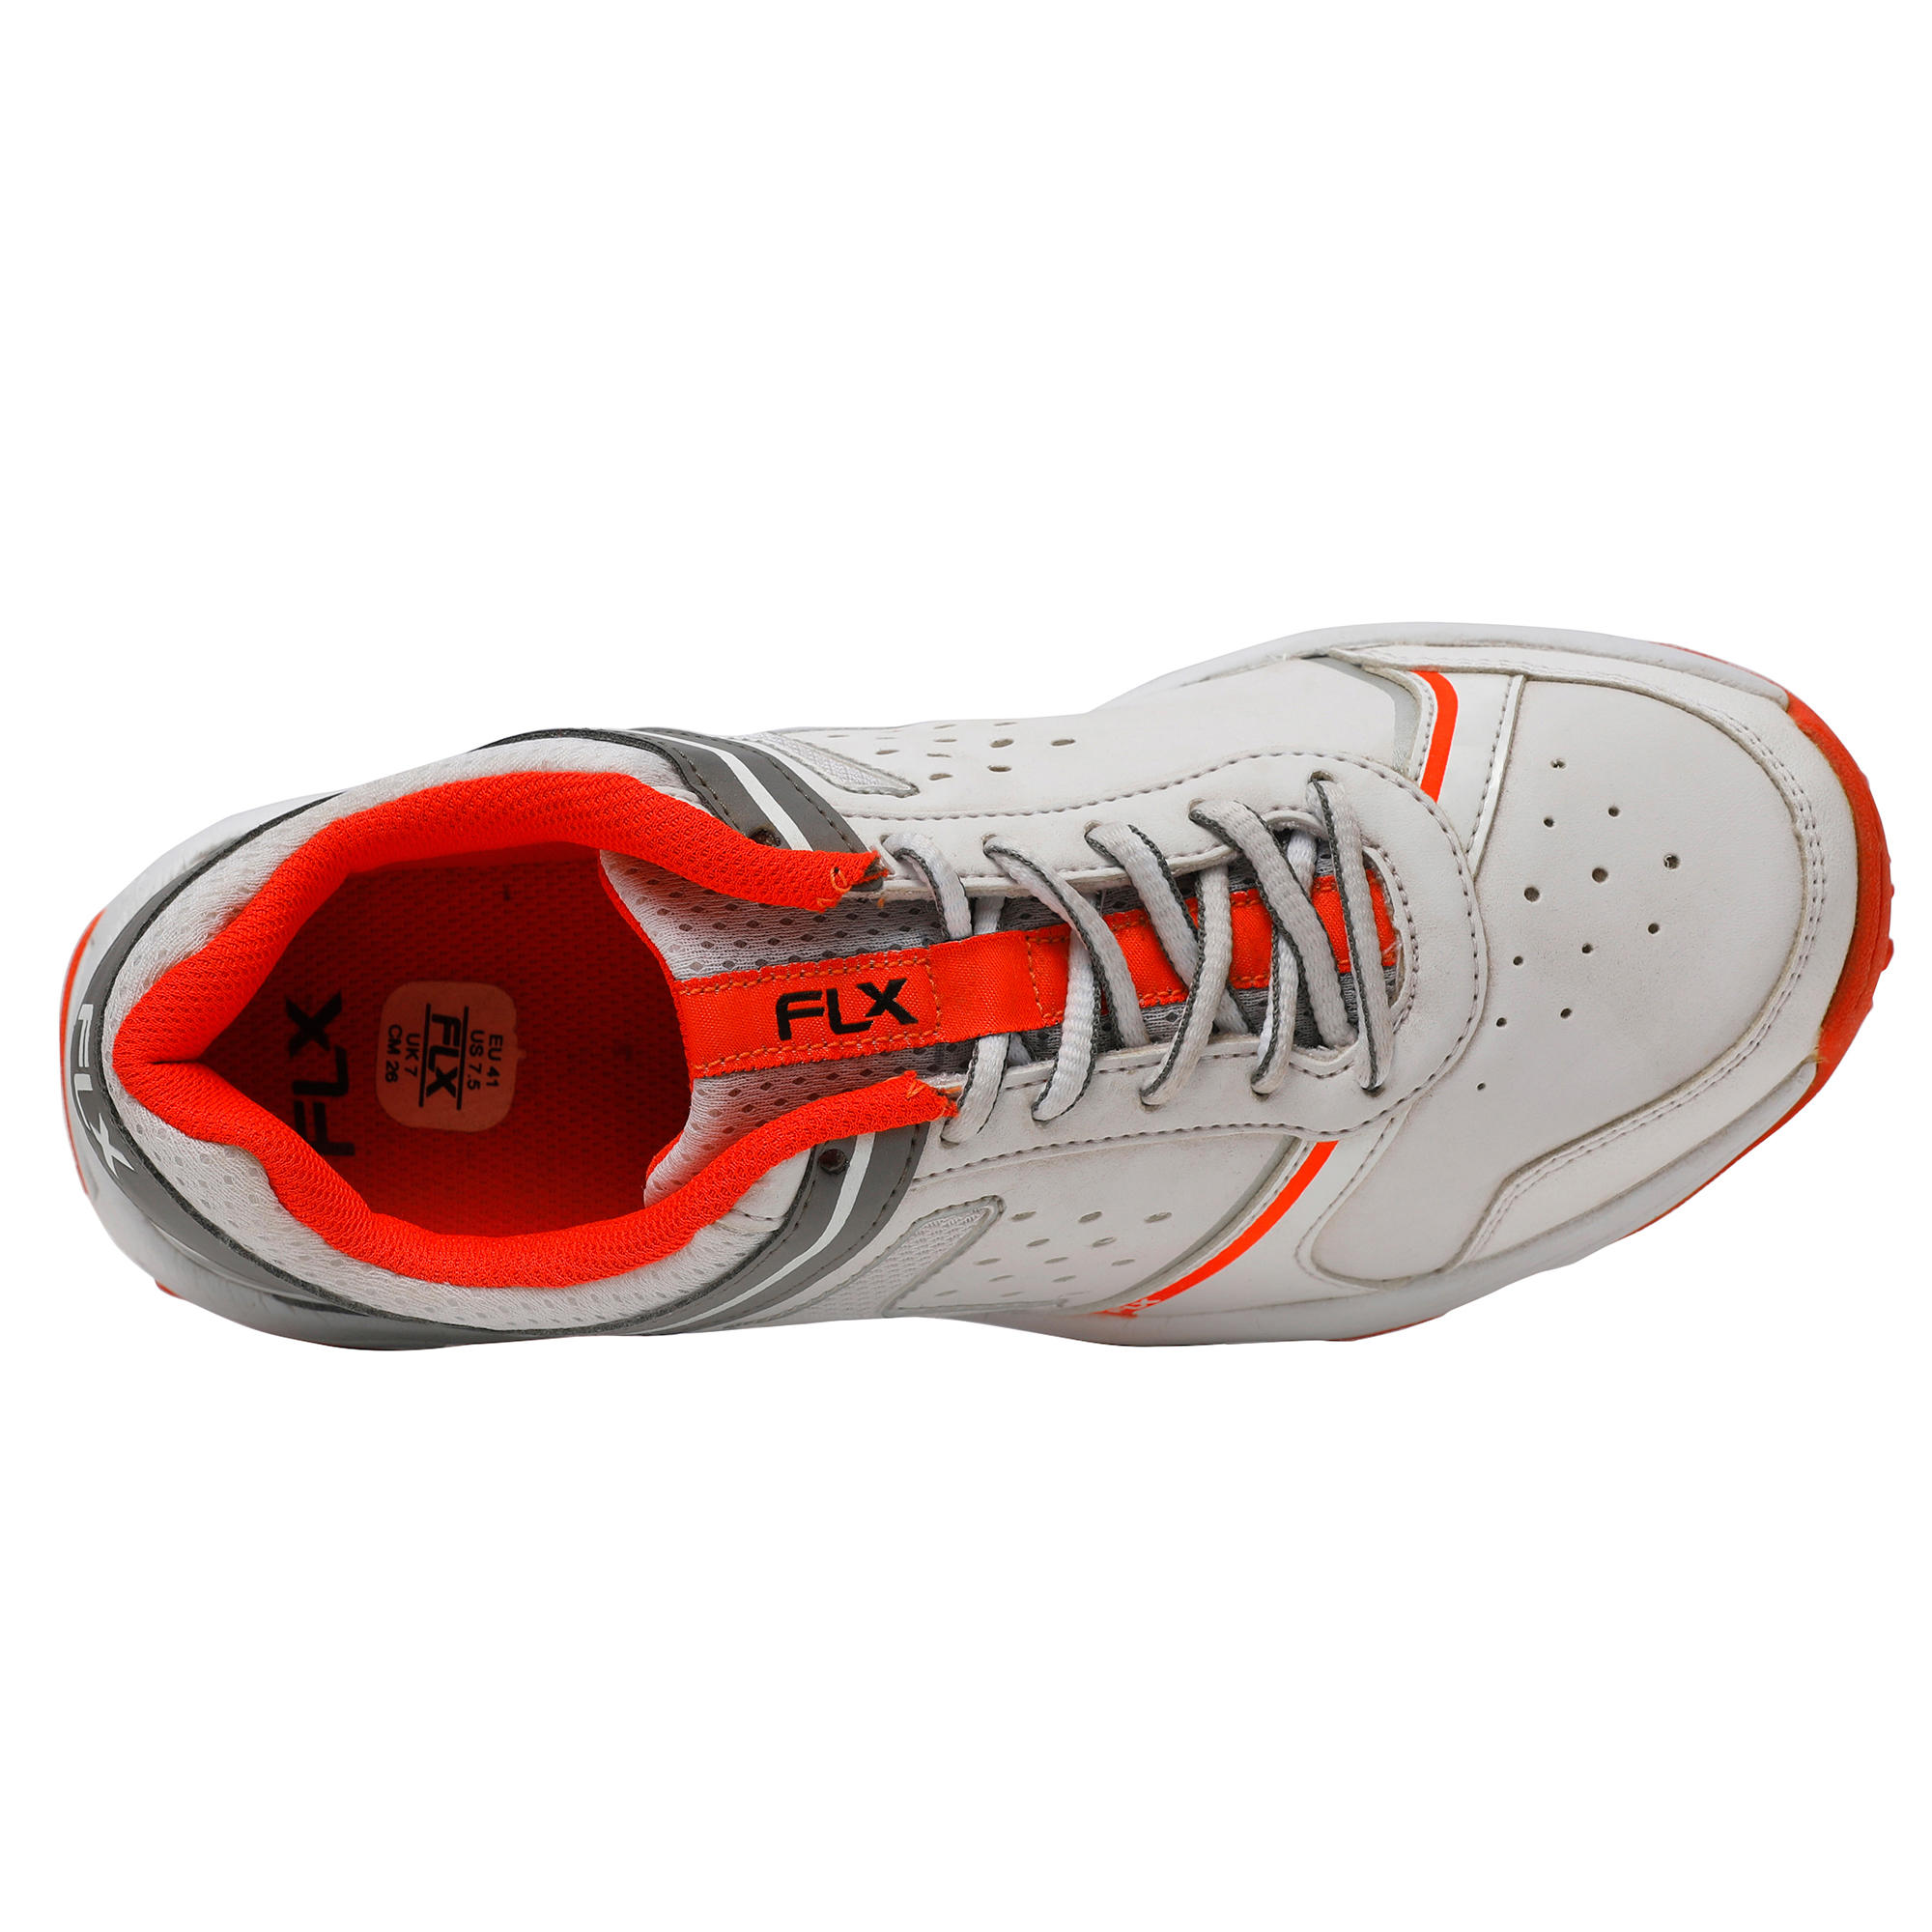 decathlon cricket shoes